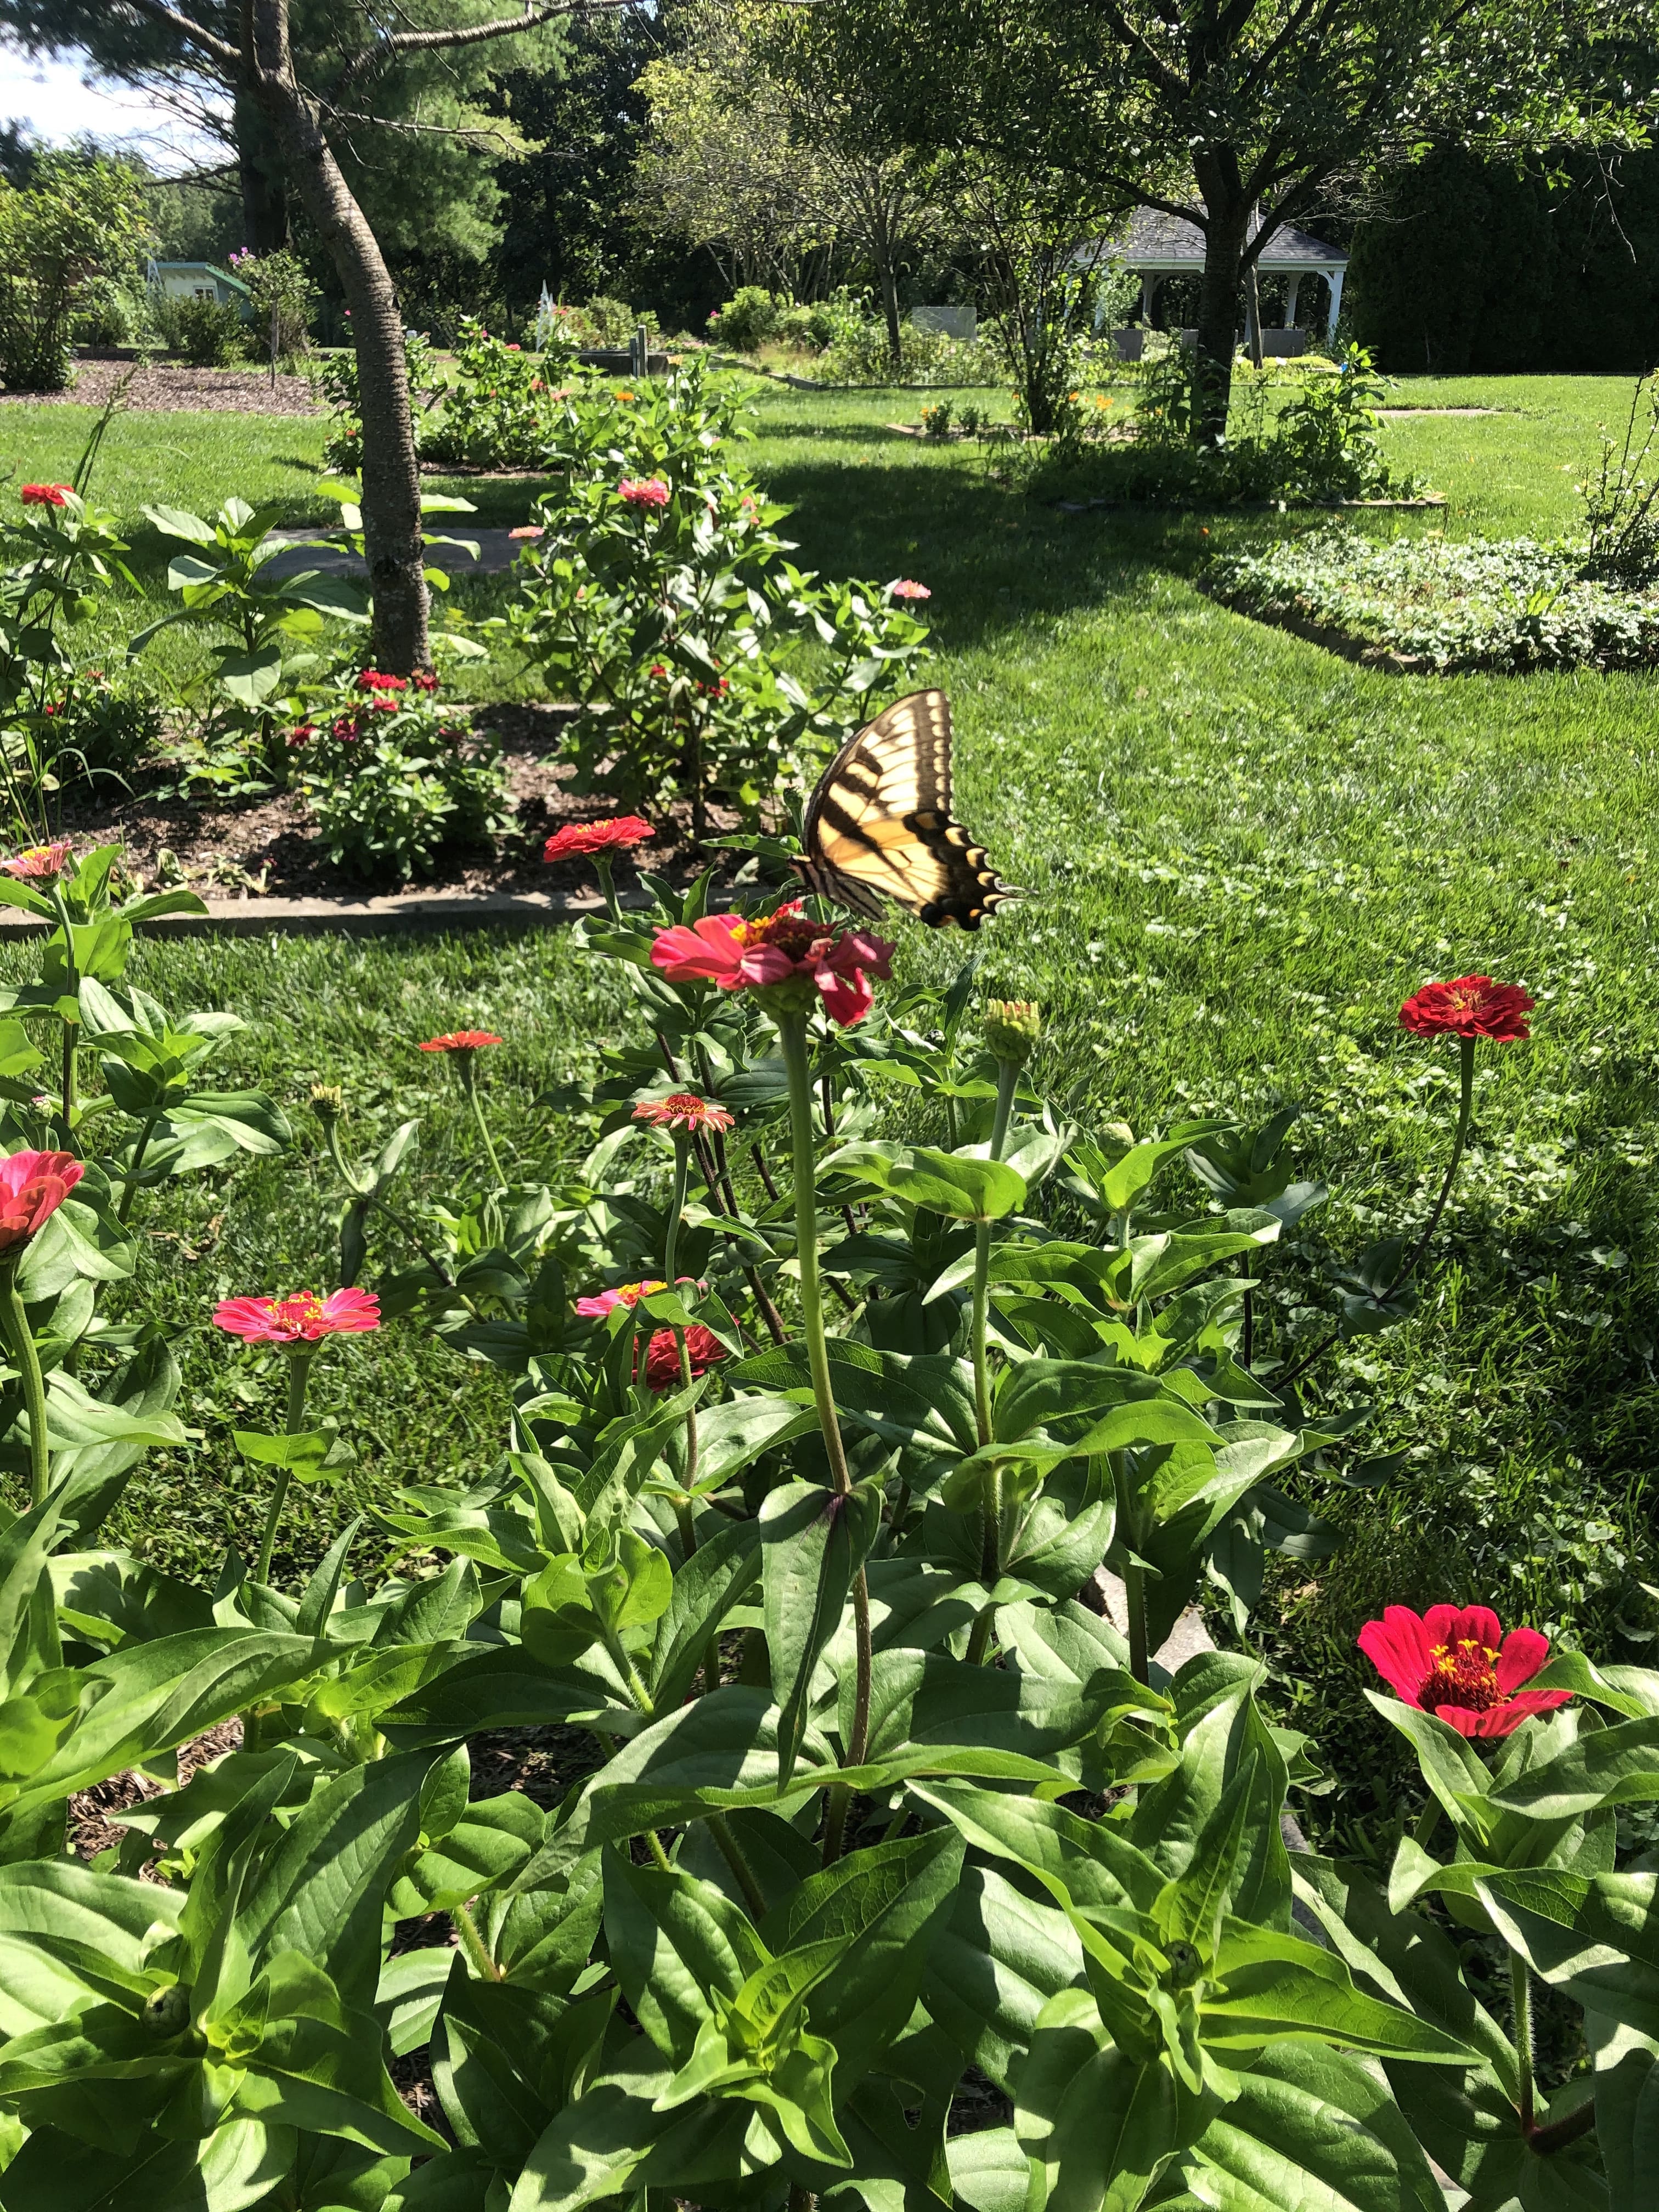 Image of monarch butterflies in a garden.